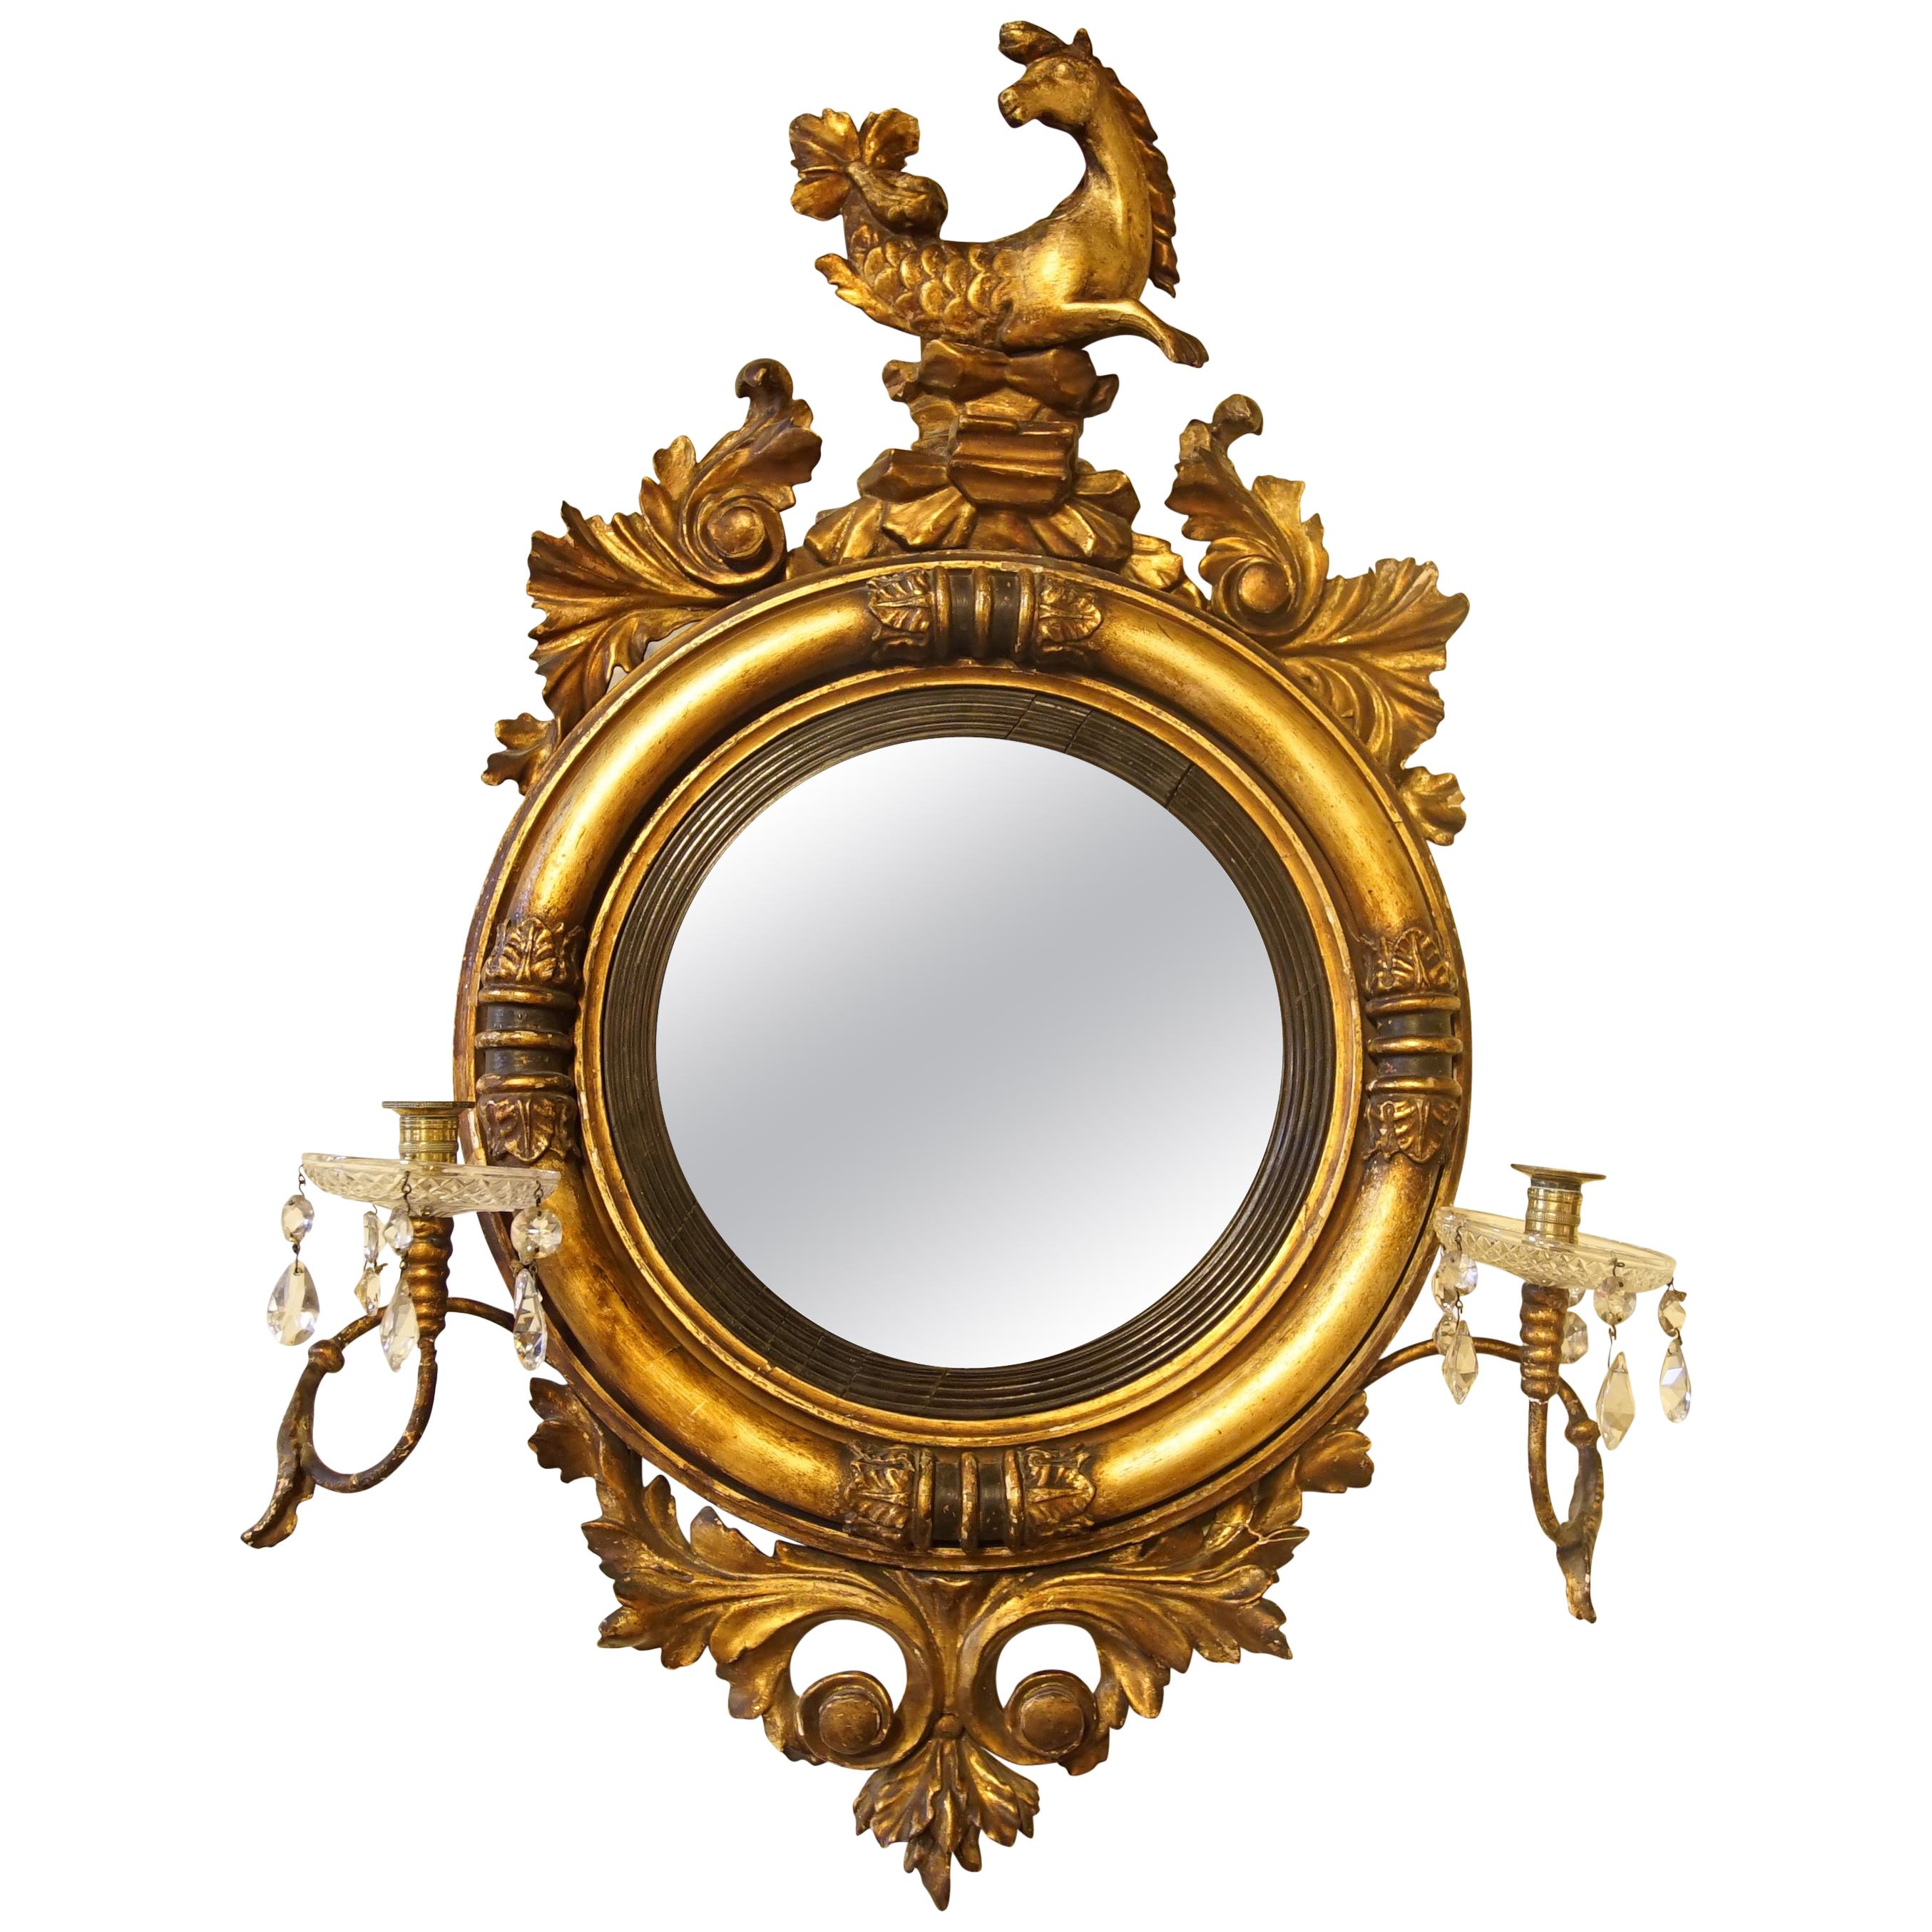 Regency Period Convex Gilt Mirror